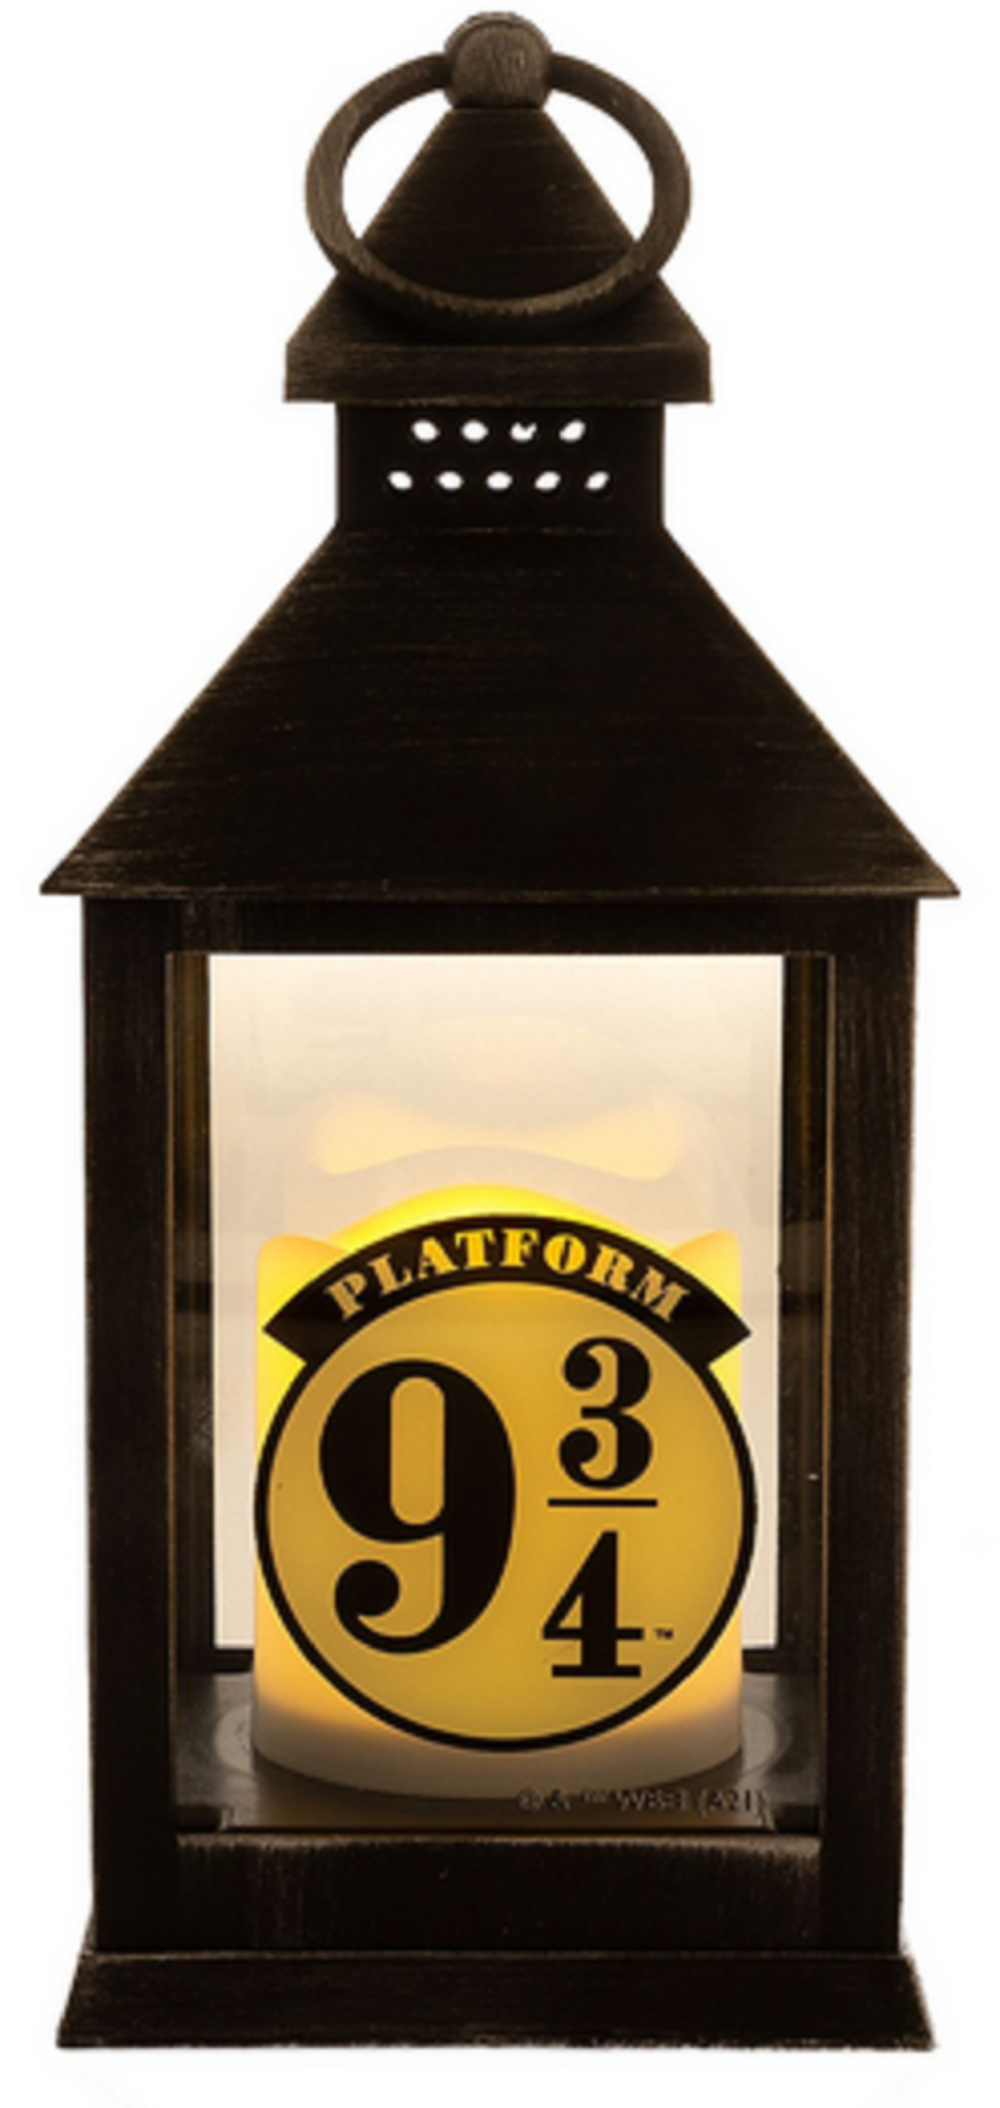 Harry Potter Platform 9 3/4 Lantern